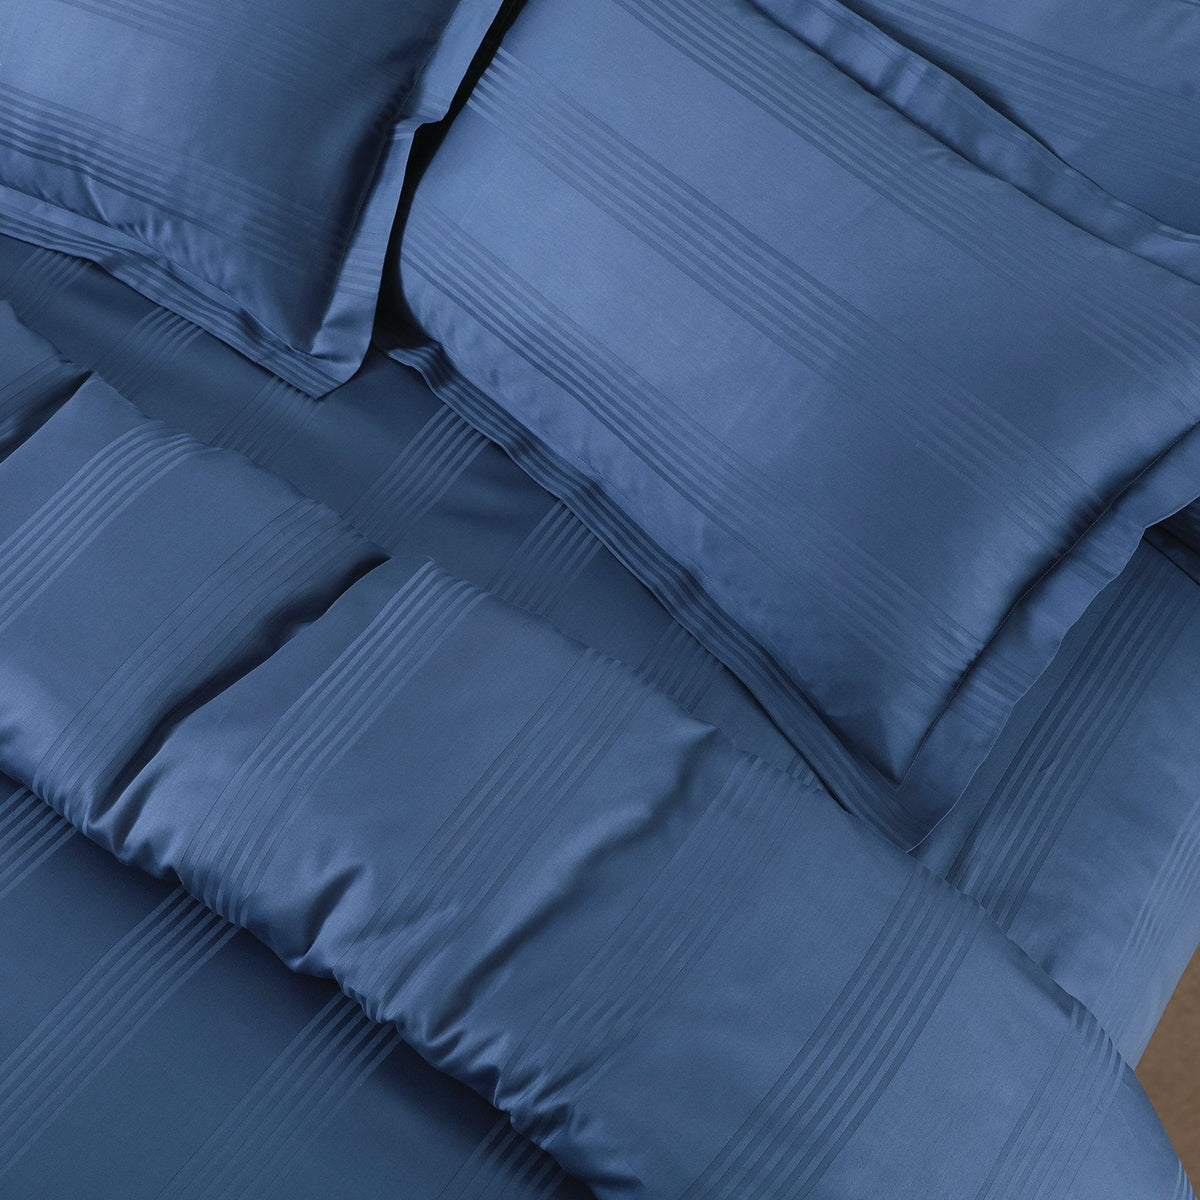 Malako Turin Jacquard Blue Stripes 450 TC 100% Cotton King Size Bedding 6 Piece Comforter Set - MALAKO